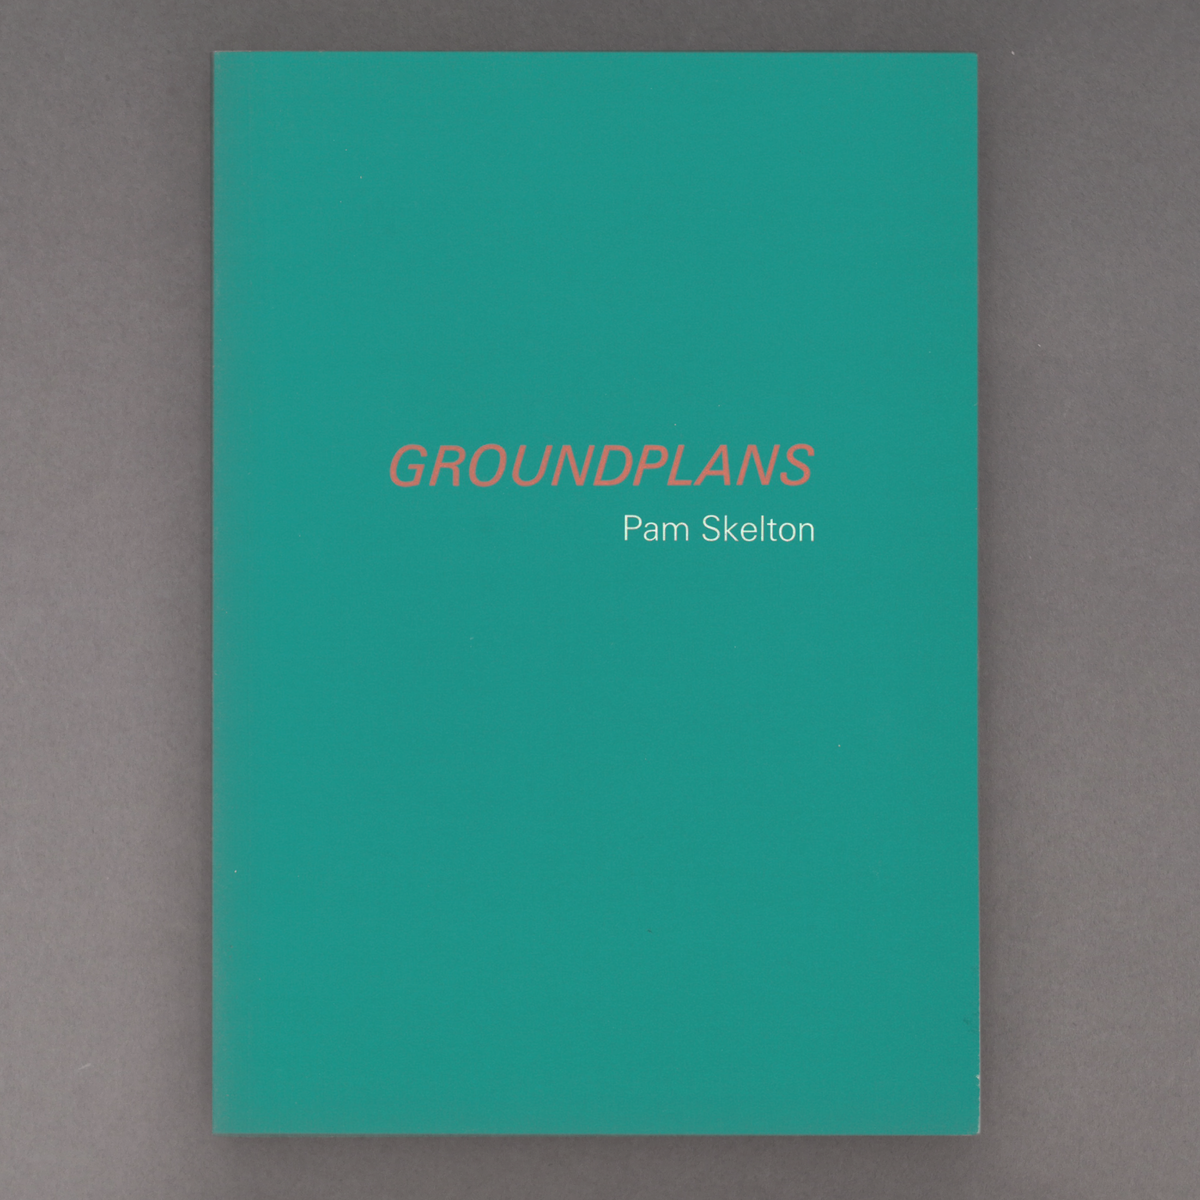 Groundplans: Pam Skelton